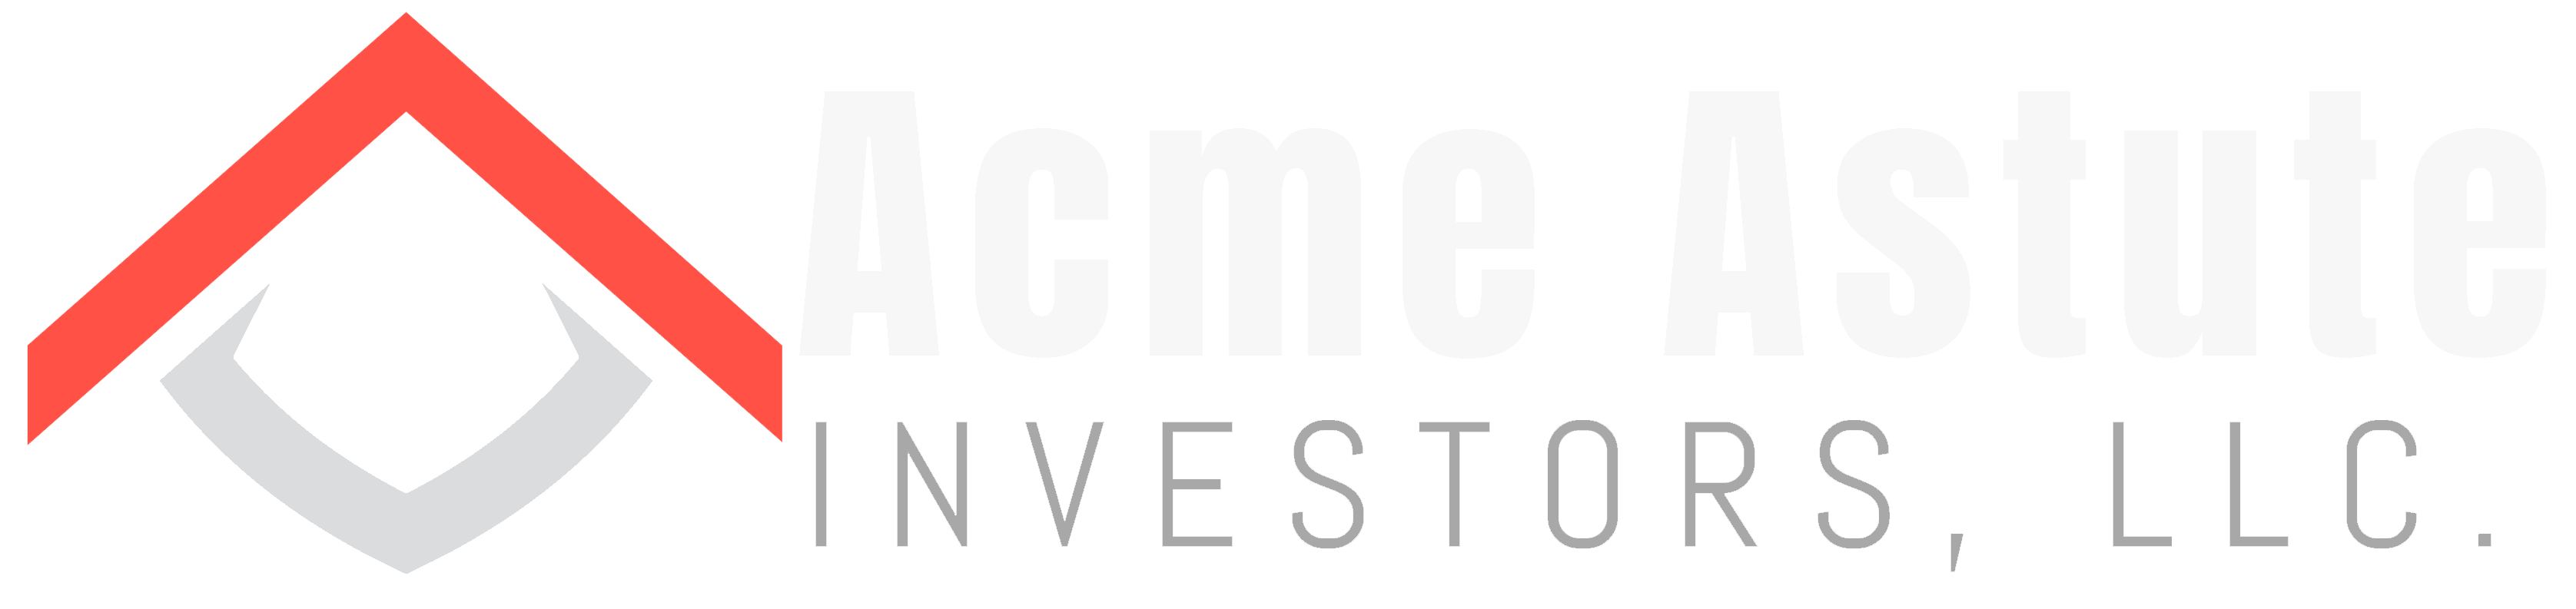 Acme Astute Investors LLCFaq